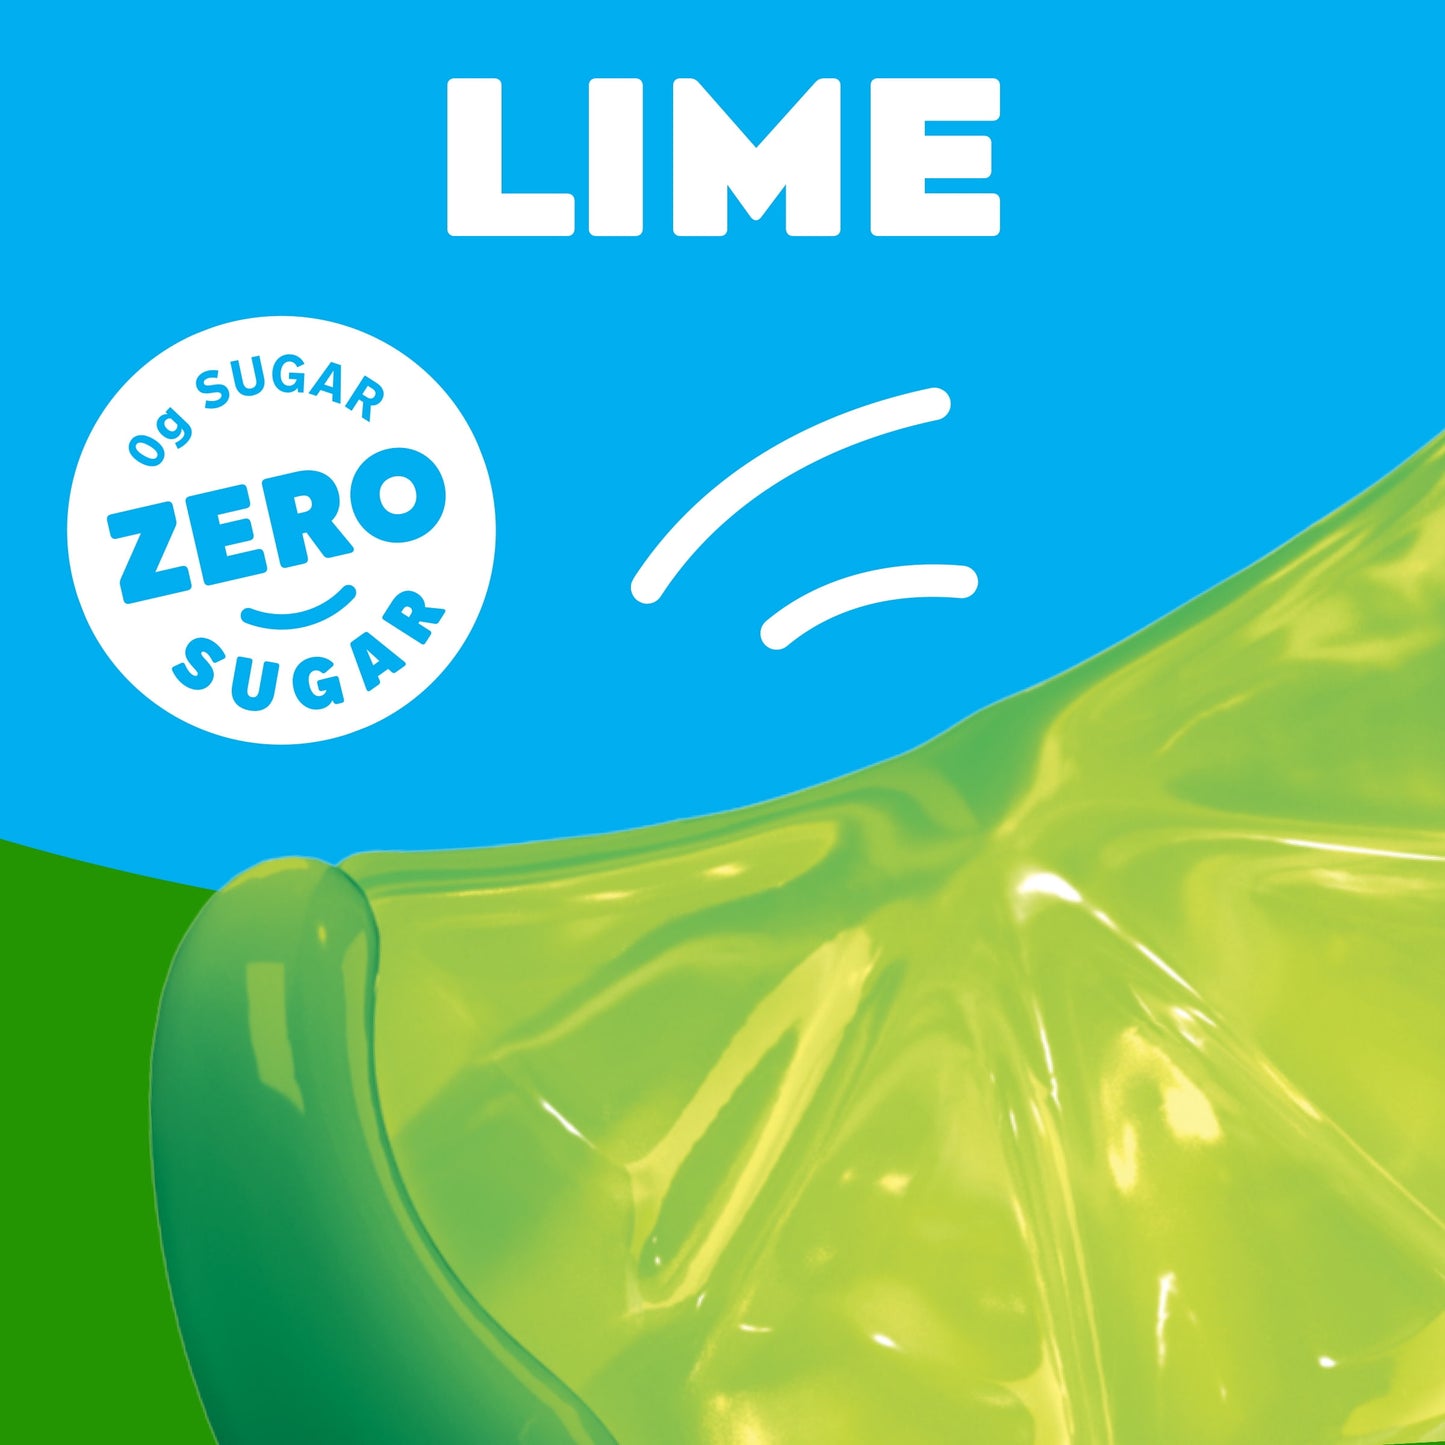 Jell-O Lime Artificially Flavored Zero Sugar Low Calorie Gelatin Dessert Mix, Family Size, 0.6 oz Box